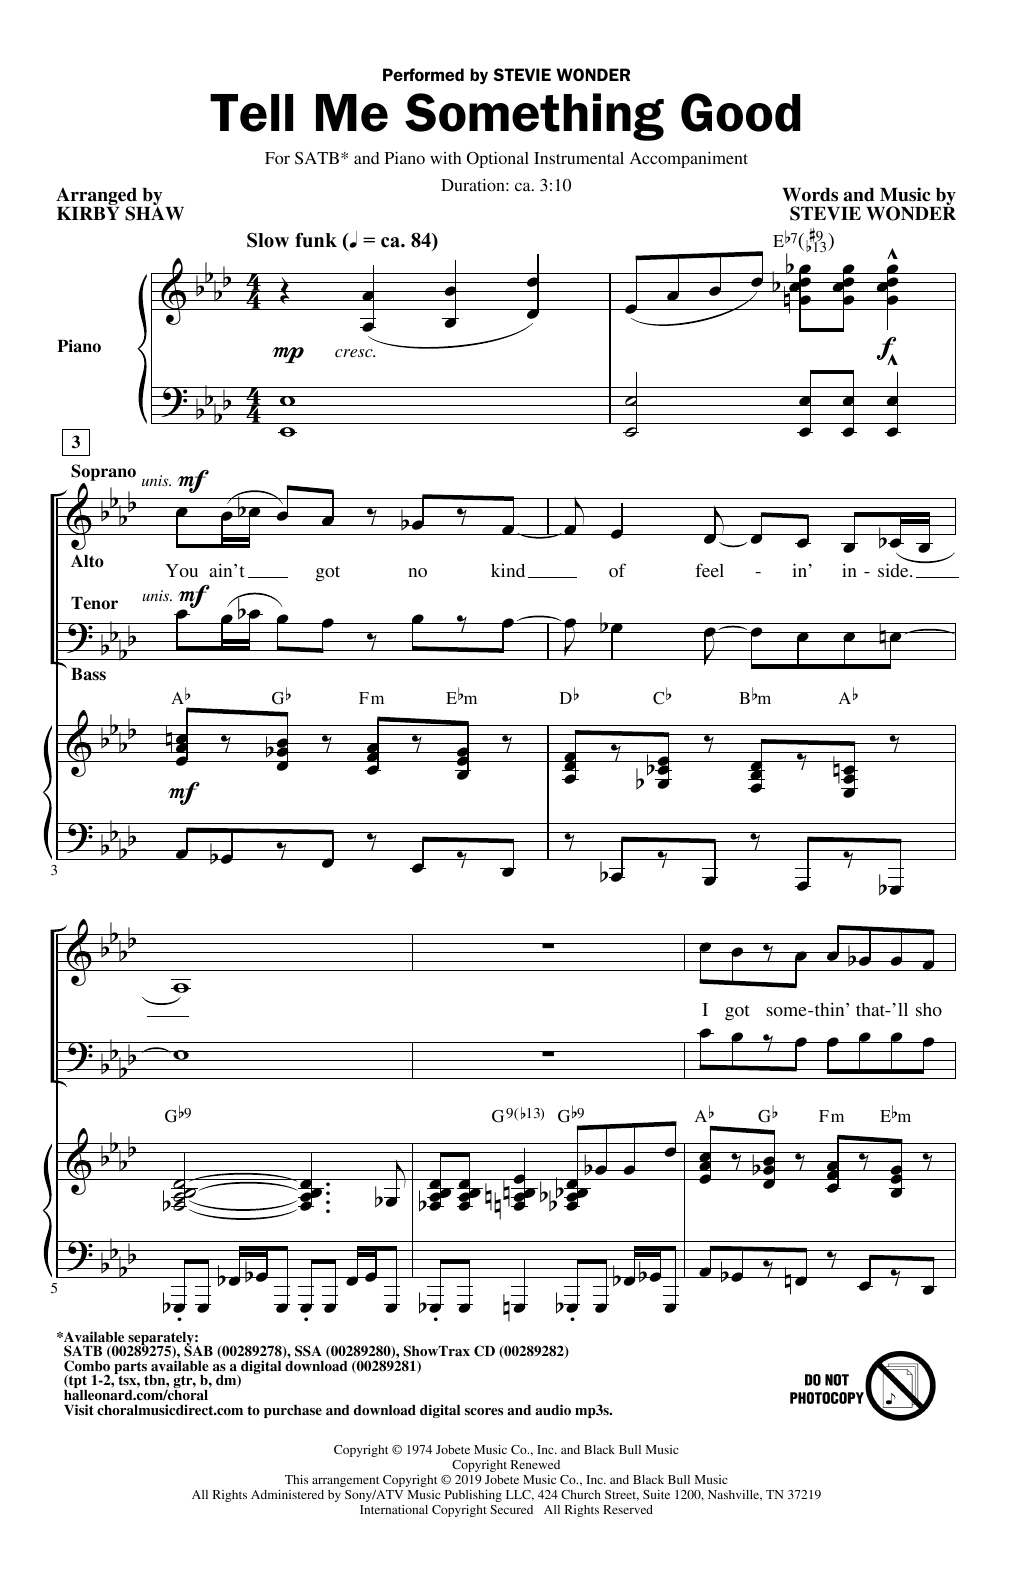 Stevie Wonder Tell Me Something Good (arr. Kirby Shaw) Sheet Music Notes & Chords for SAB Choir - Download or Print PDF